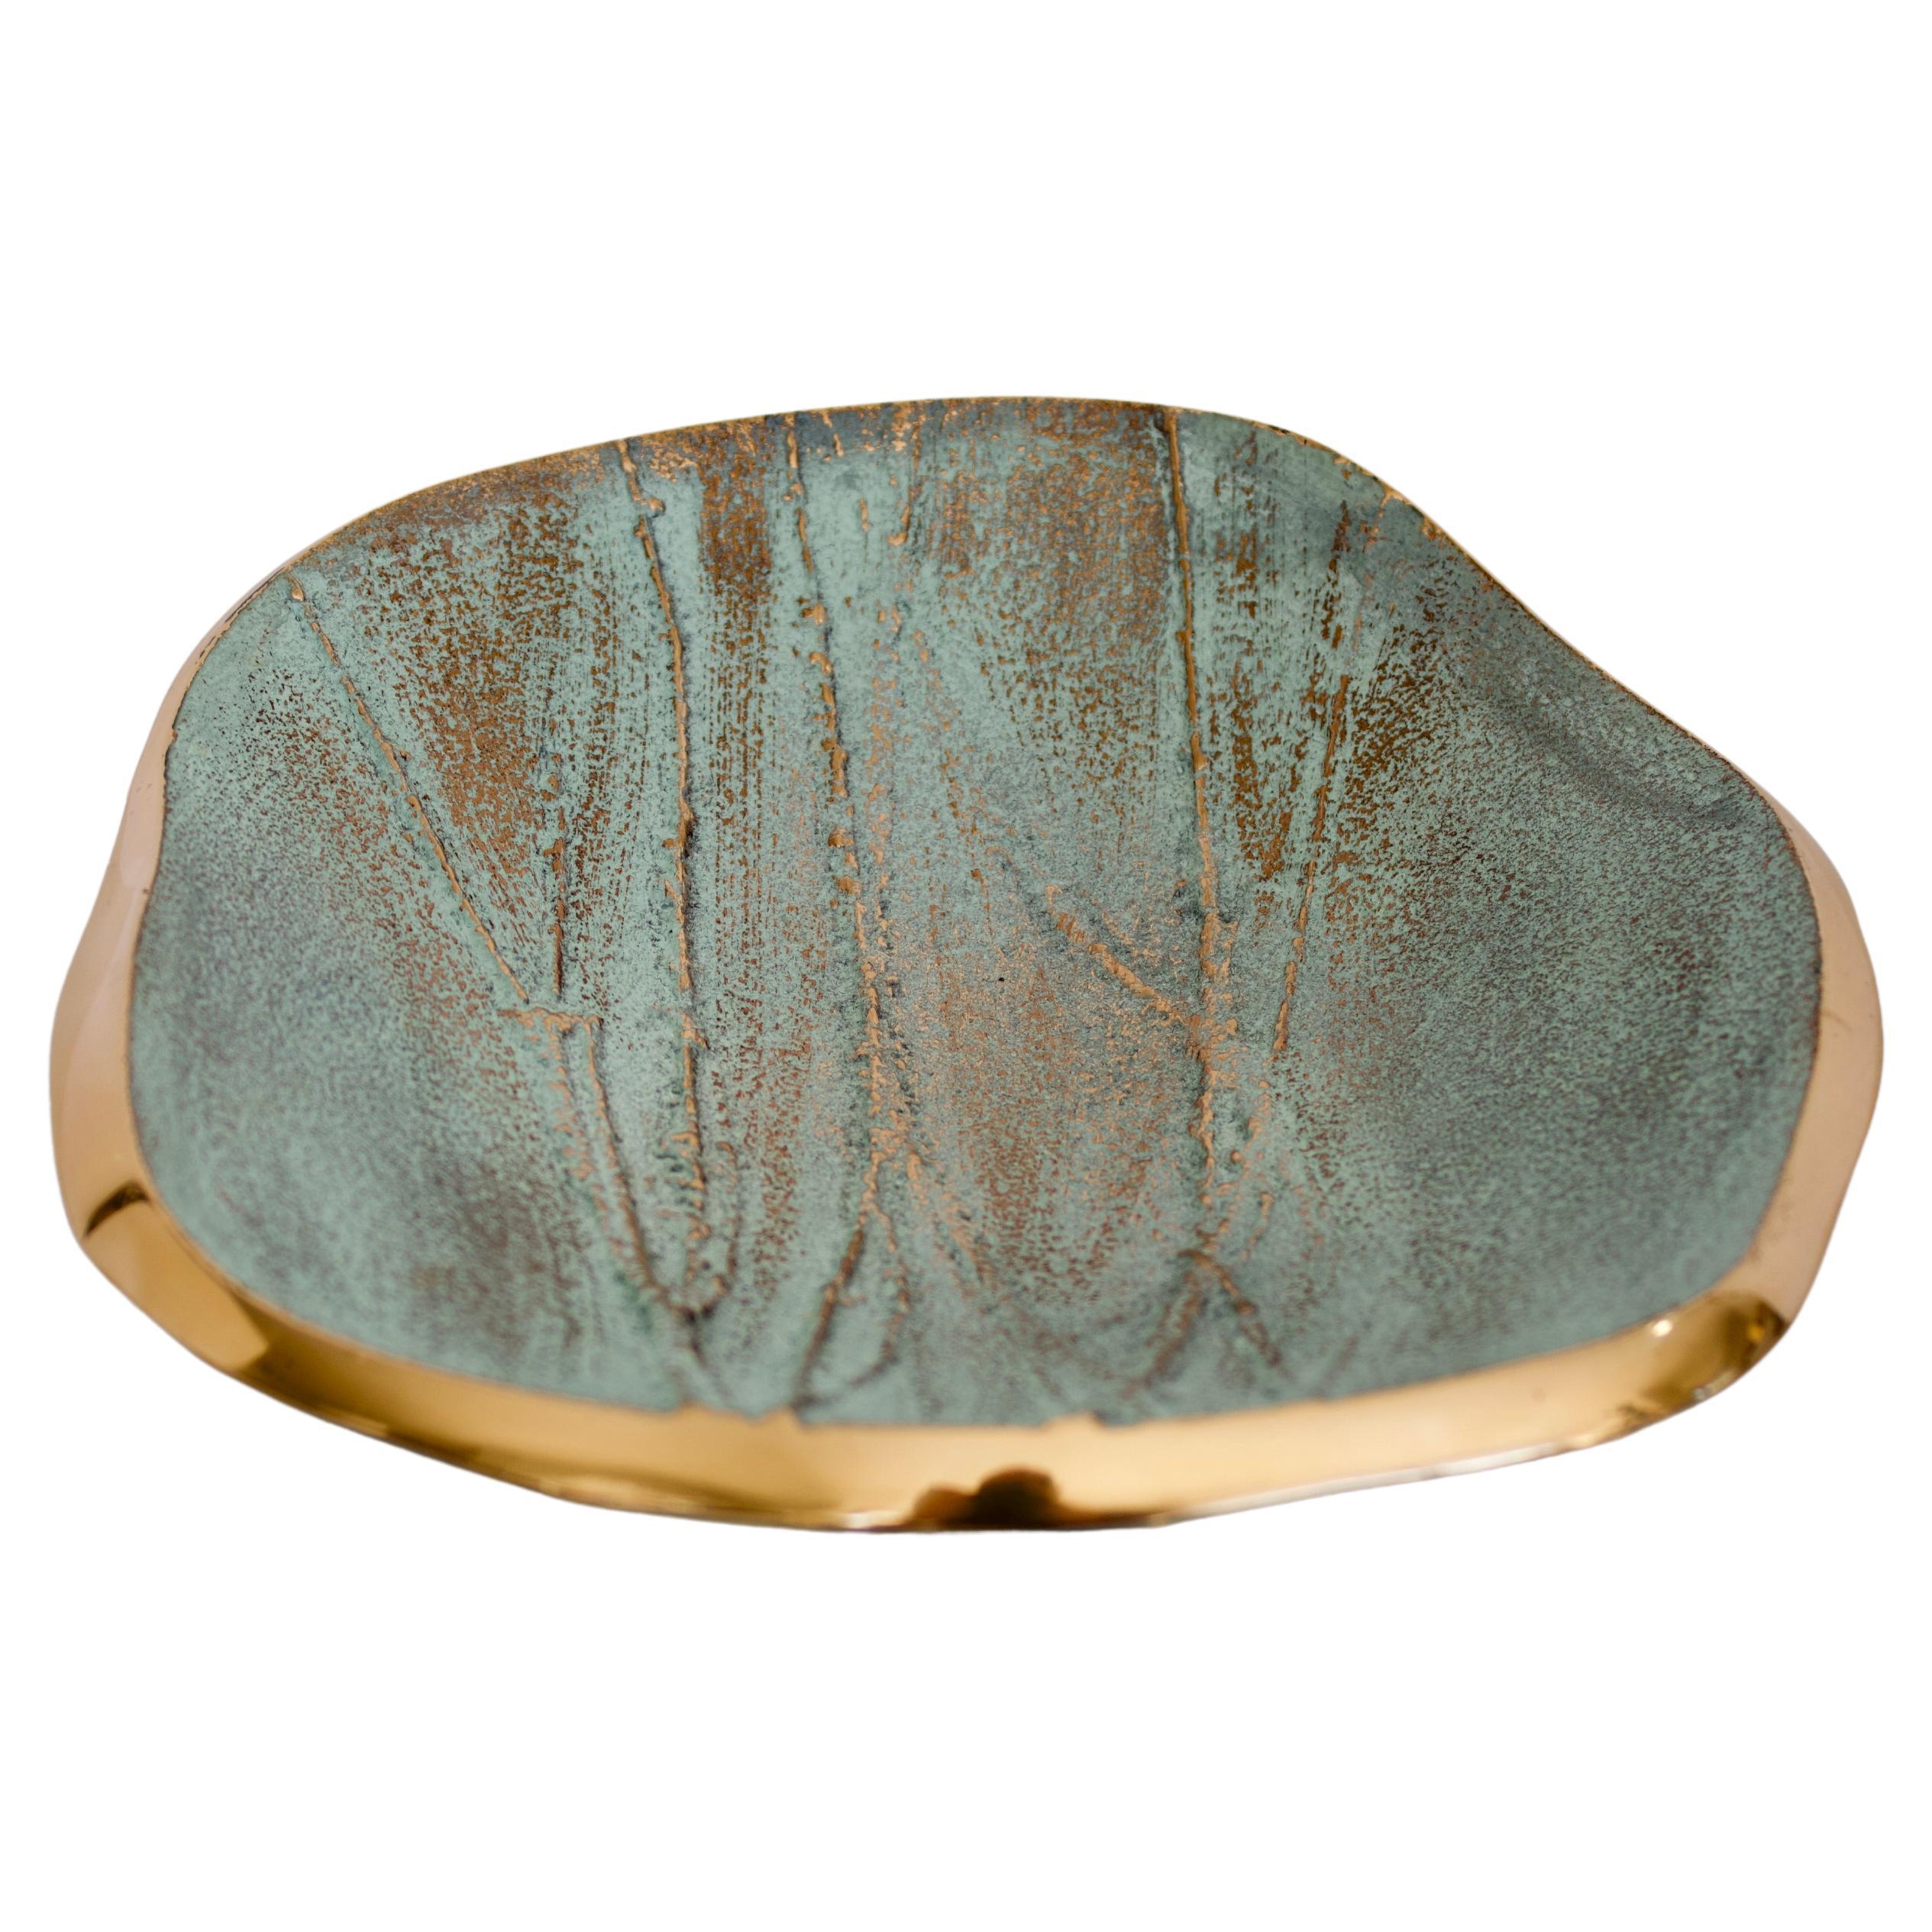 Monique Gerber Stratos Collection Bronze Dish Designed by Serge Mansau